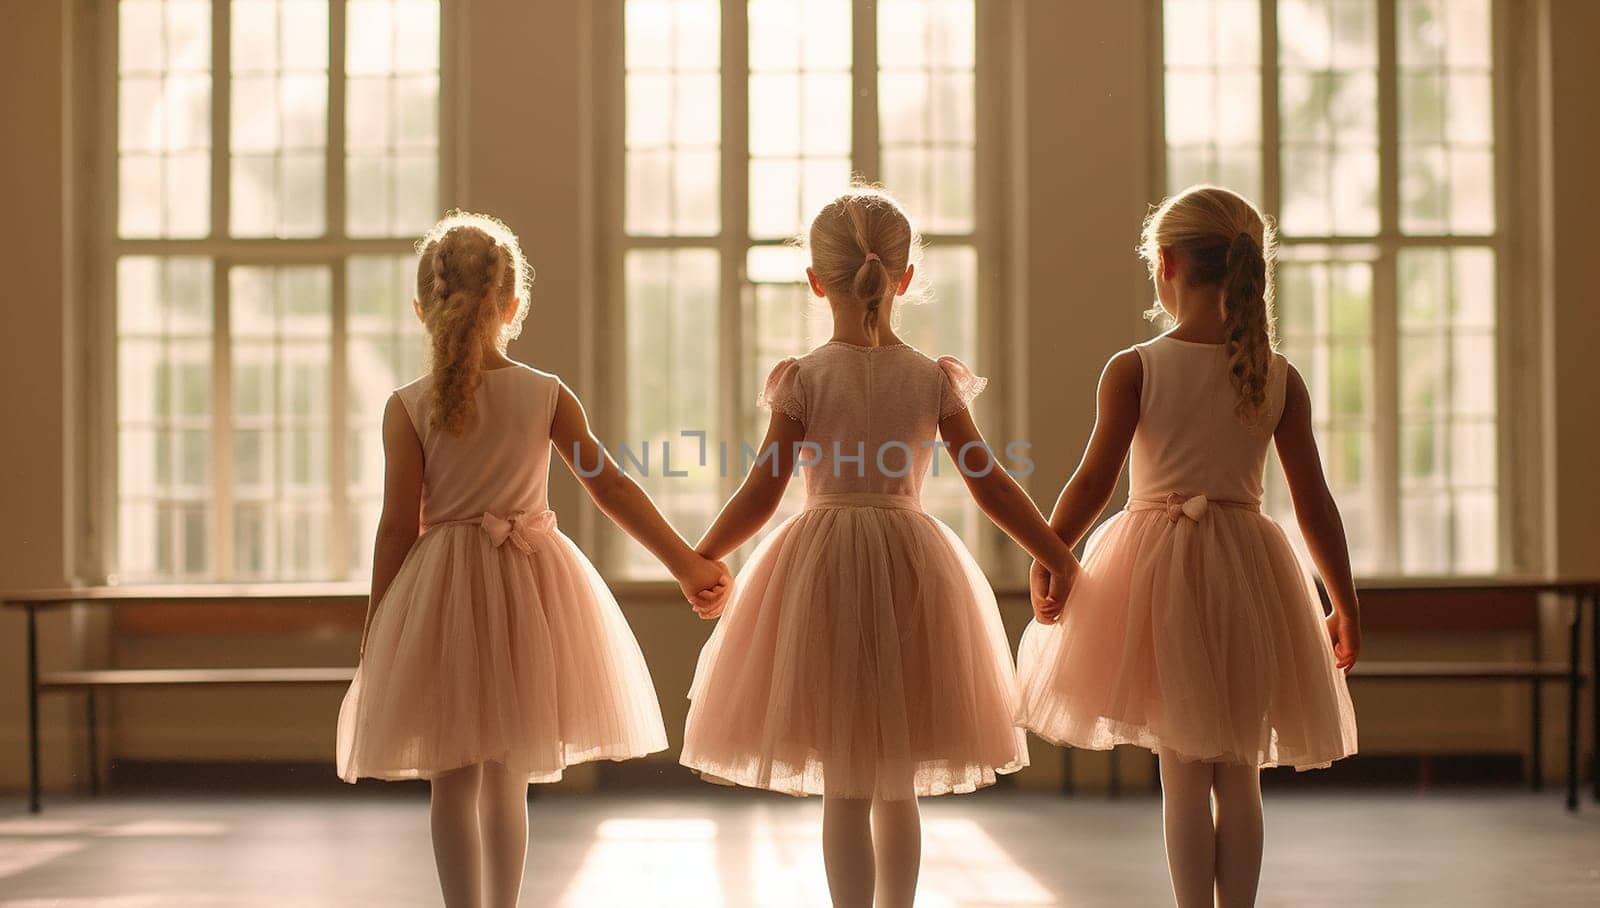 Cute ballerina little girls in pink tutu dance practice in the room, kid ballet concept. Adorable children dancing together classical ballet in studio by Annebel146